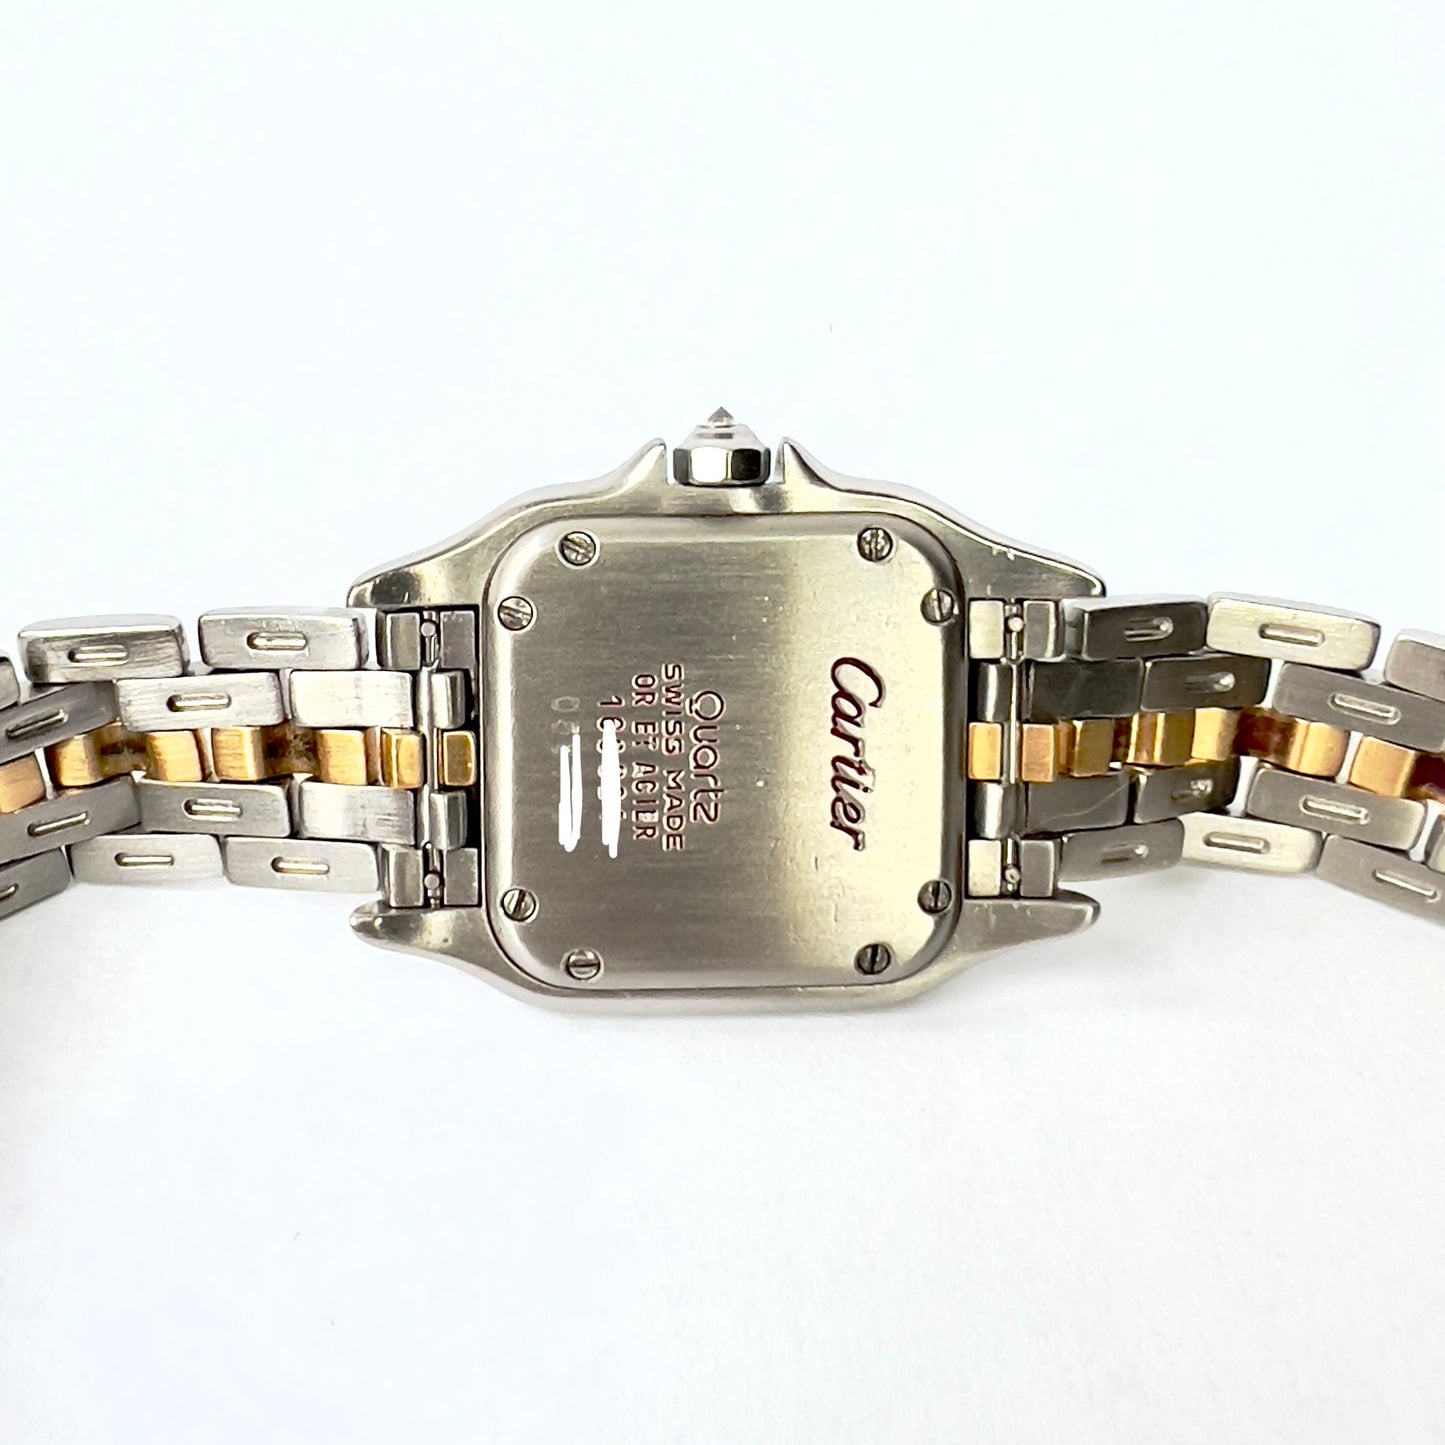 CARTIER PANTHERE Quartz 23mm 1 Row Gold 0.95TCW DIAMOND Watch